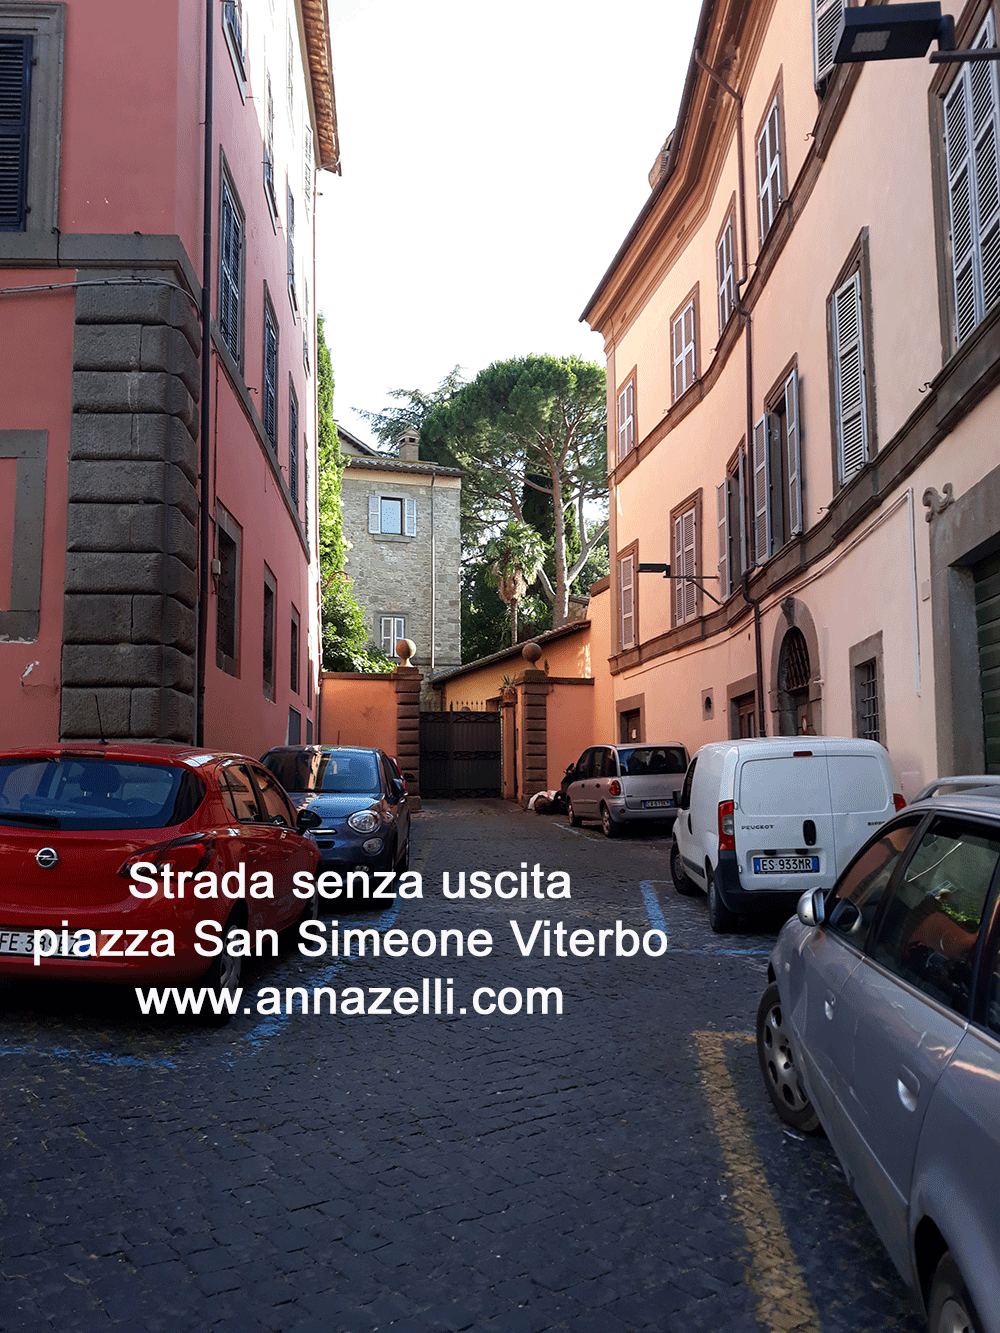 strada senza uscita a piazza san Simeone Viterbo info foto anna zelli